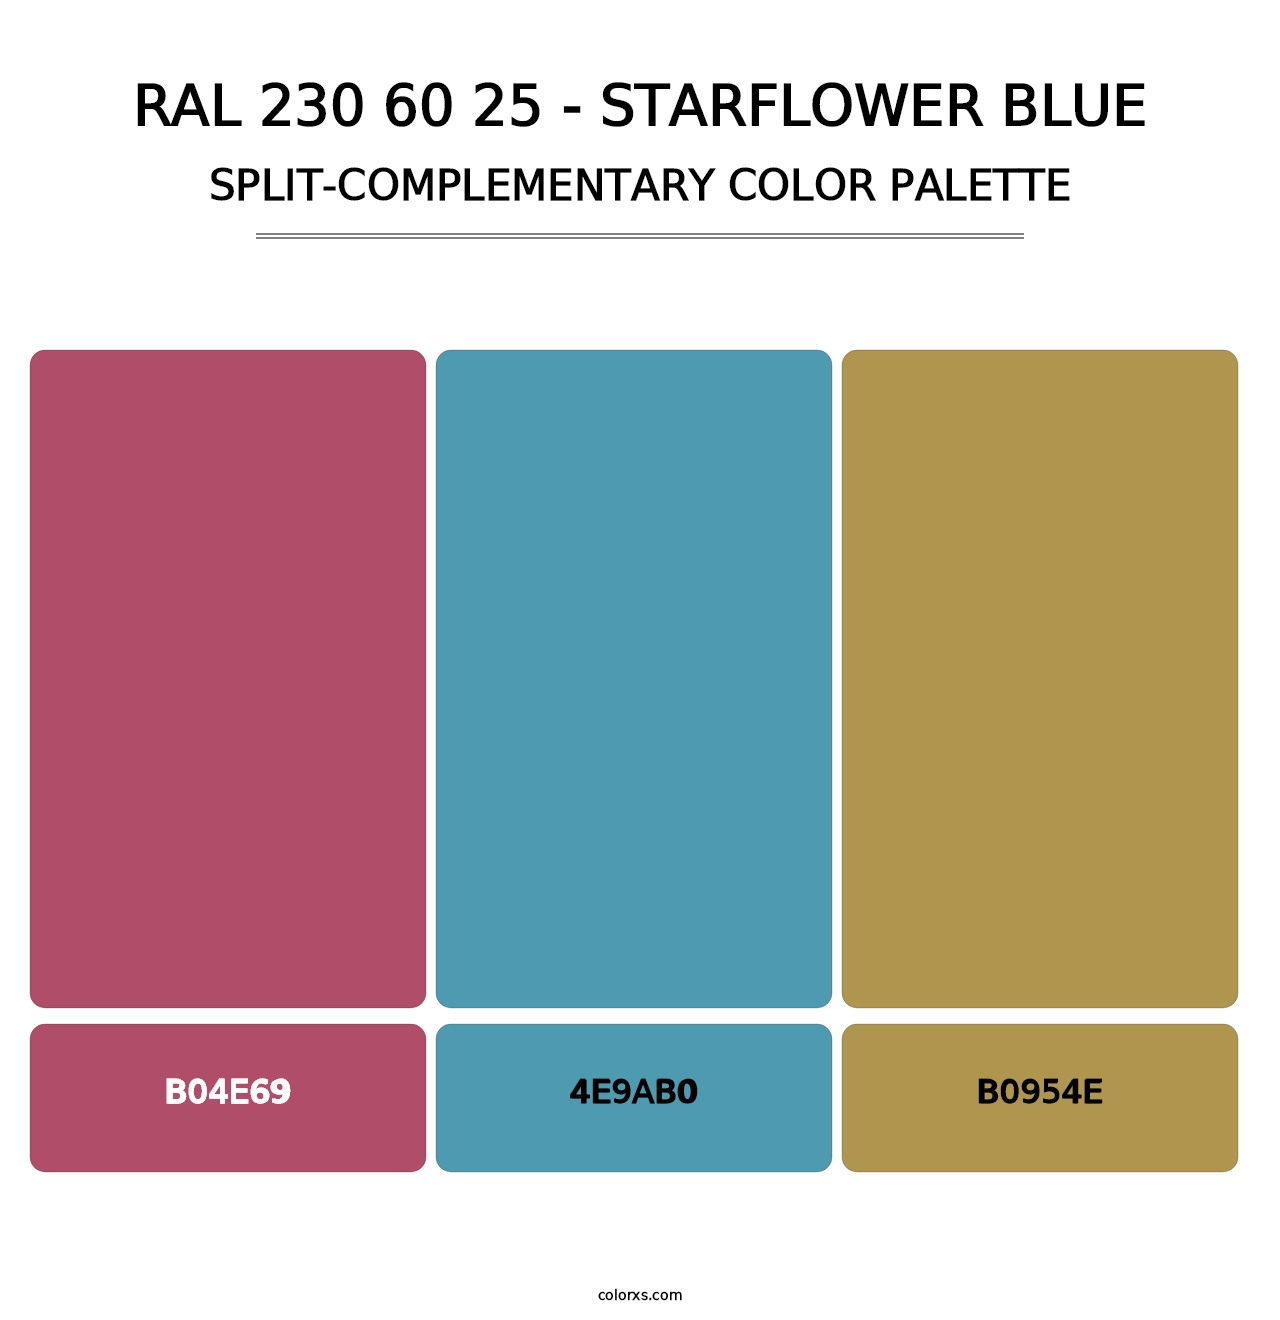 RAL 230 60 25 - Starflower Blue - Split-Complementary Color Palette